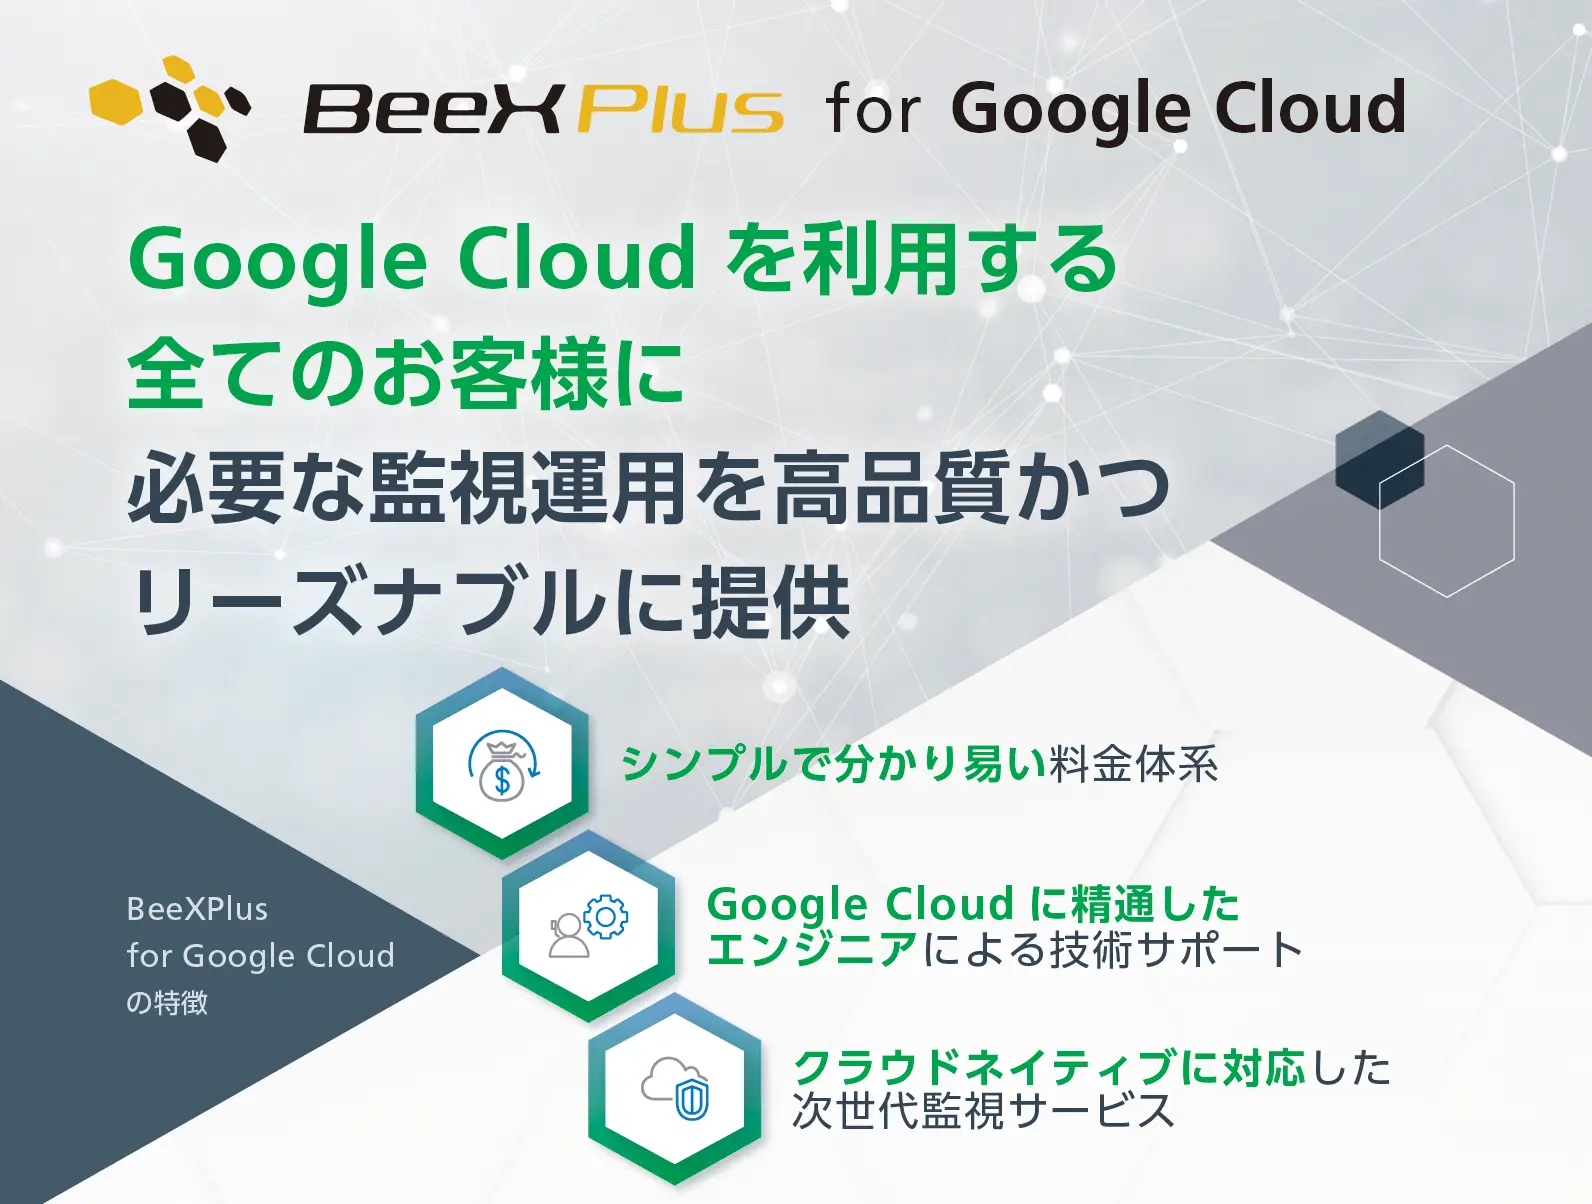 BeeXPlus for Google Cloud紹介リーフレット